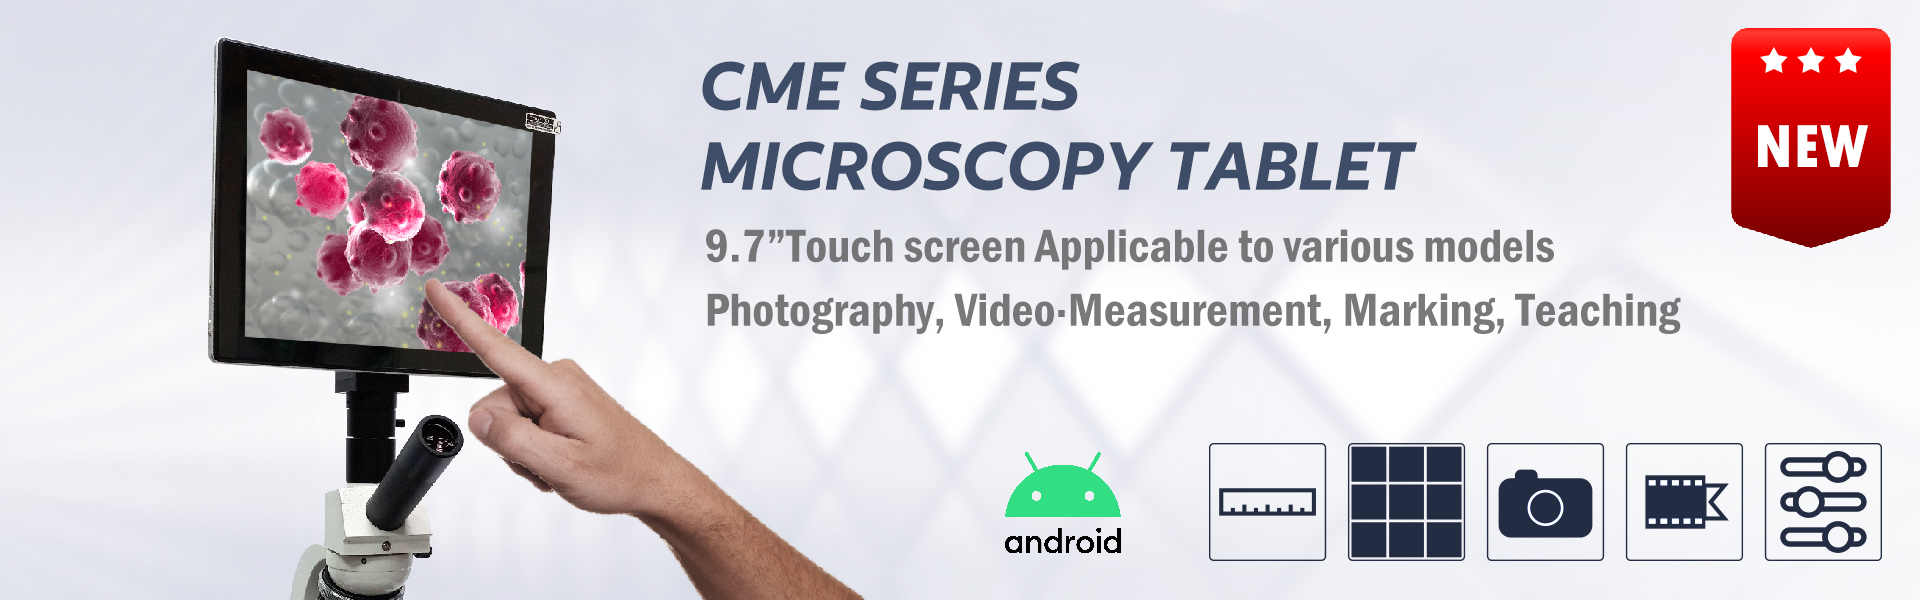 CME Series Microscopy Tablet